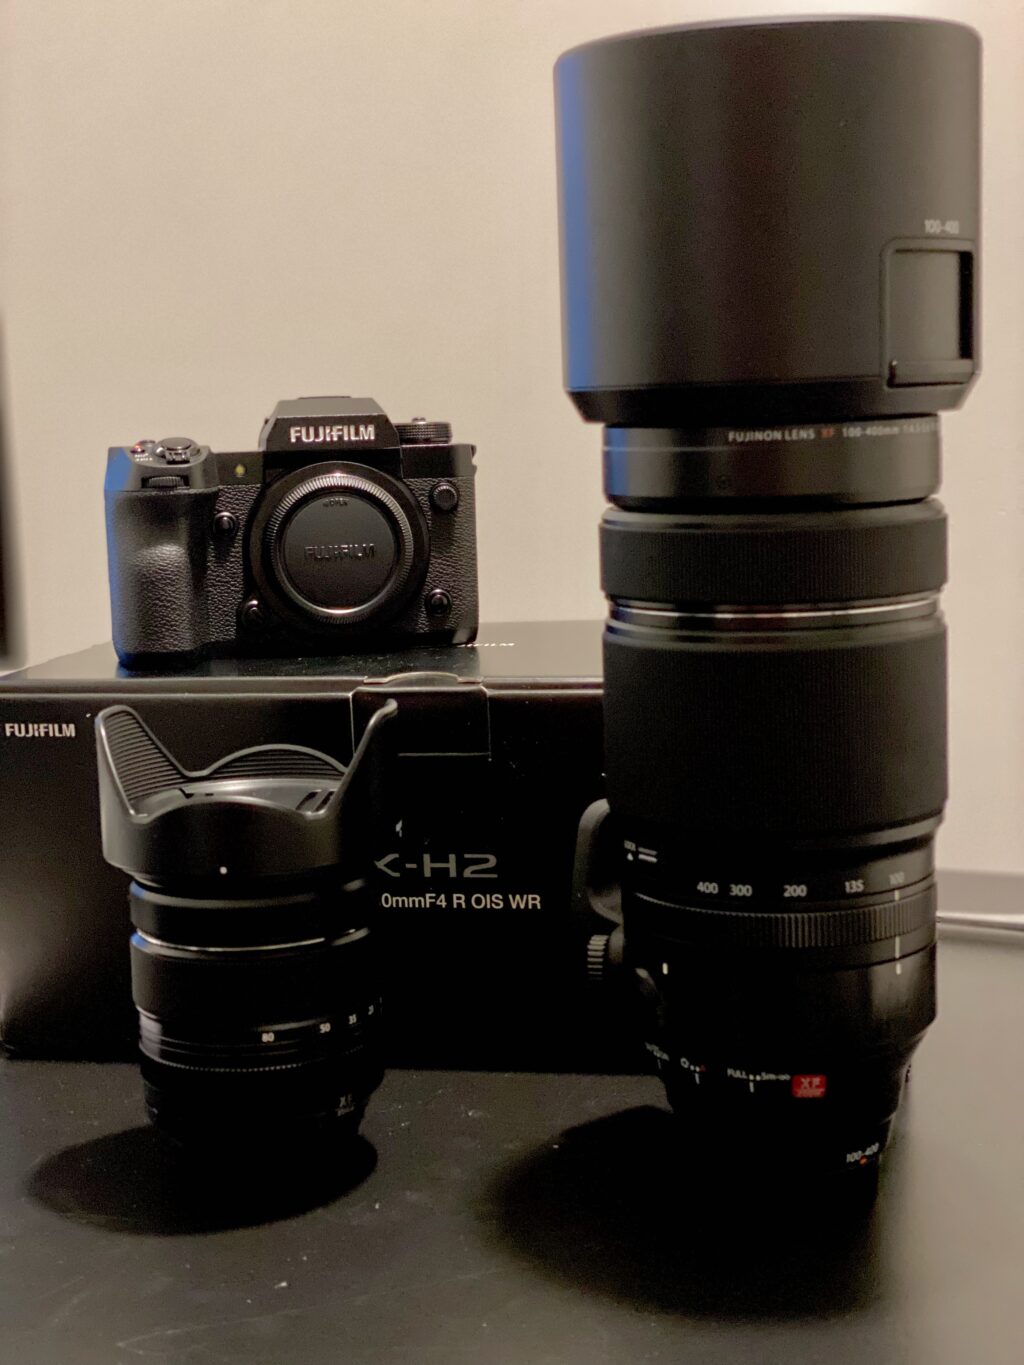 A selection of Fujifilm camera equipment on a desk.